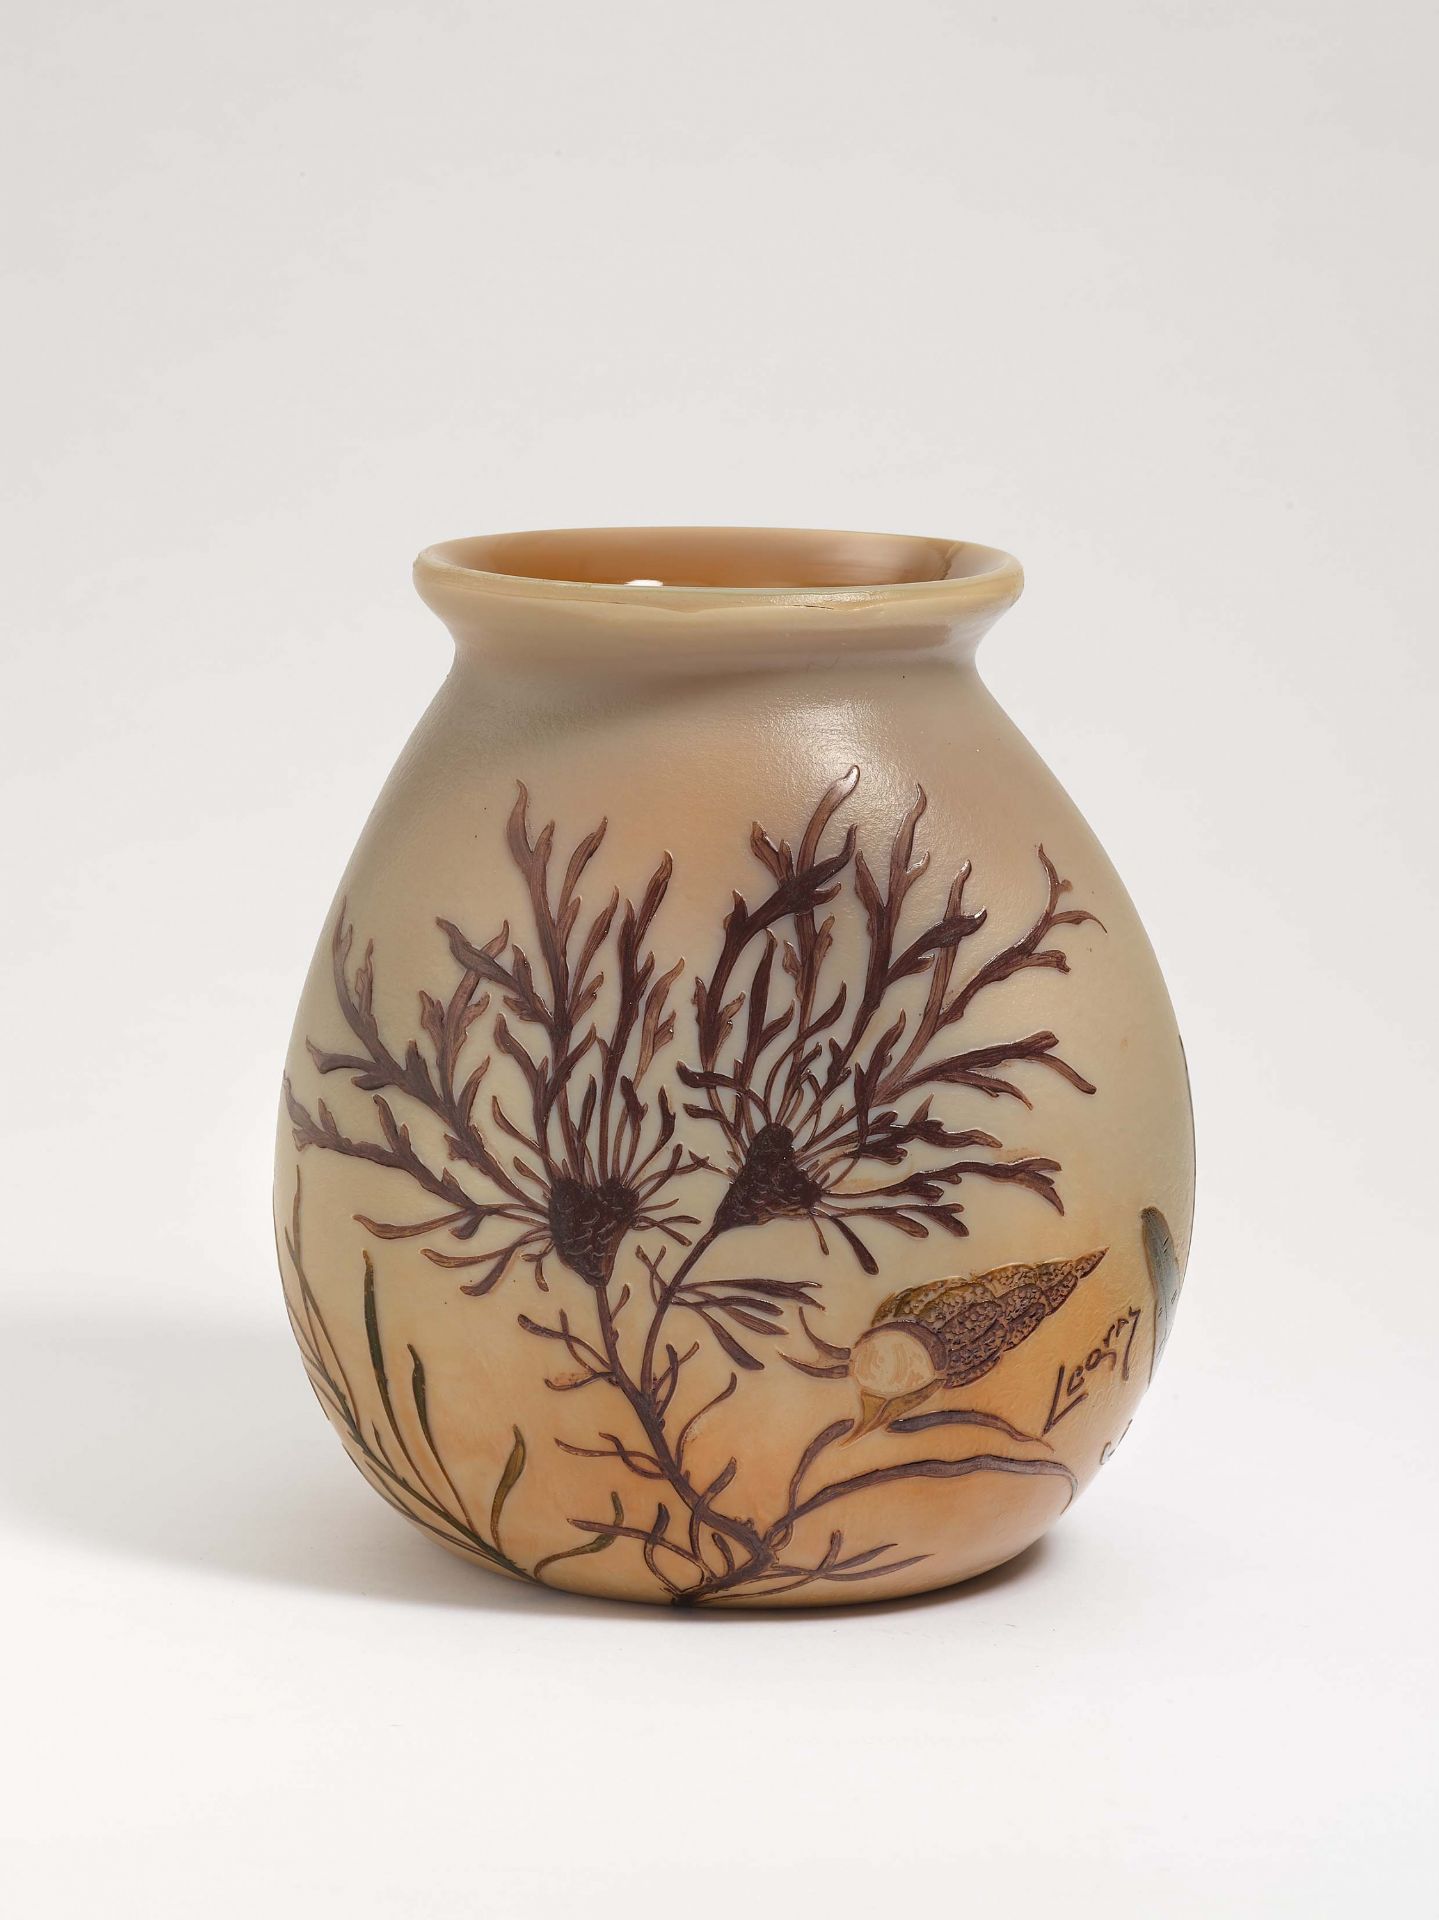 Vase "Algues"Legras & Cie, Saint-Denis, 1920er Jahre Farbloses Glas, rau geätzt. Bauchiger Korpus,